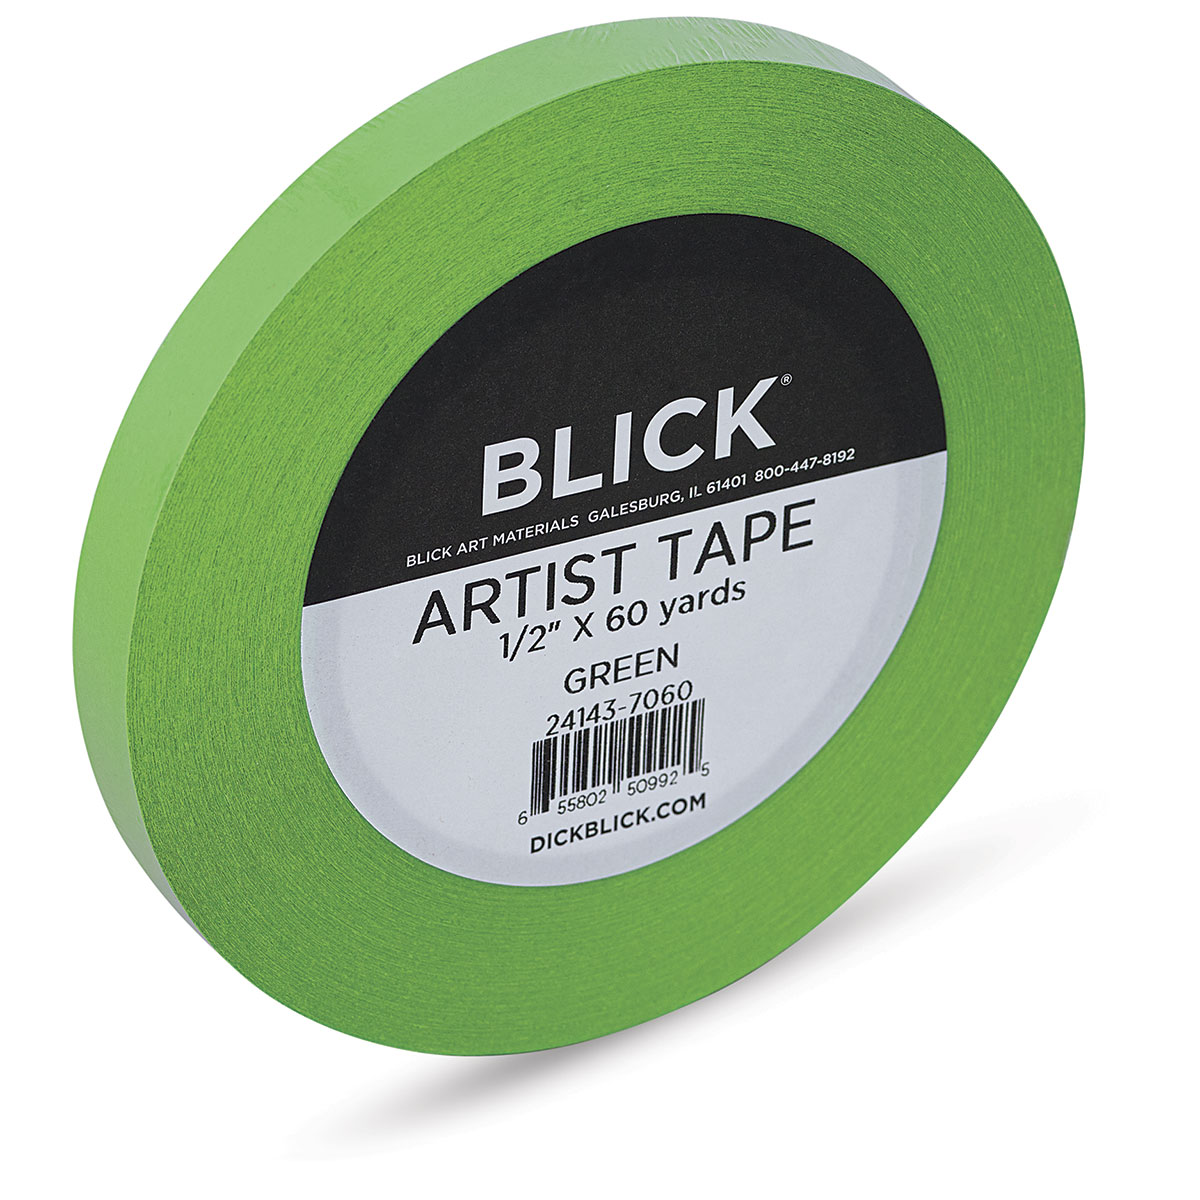 Blick Artist Tape - Green, 1/2'' x 60 yds